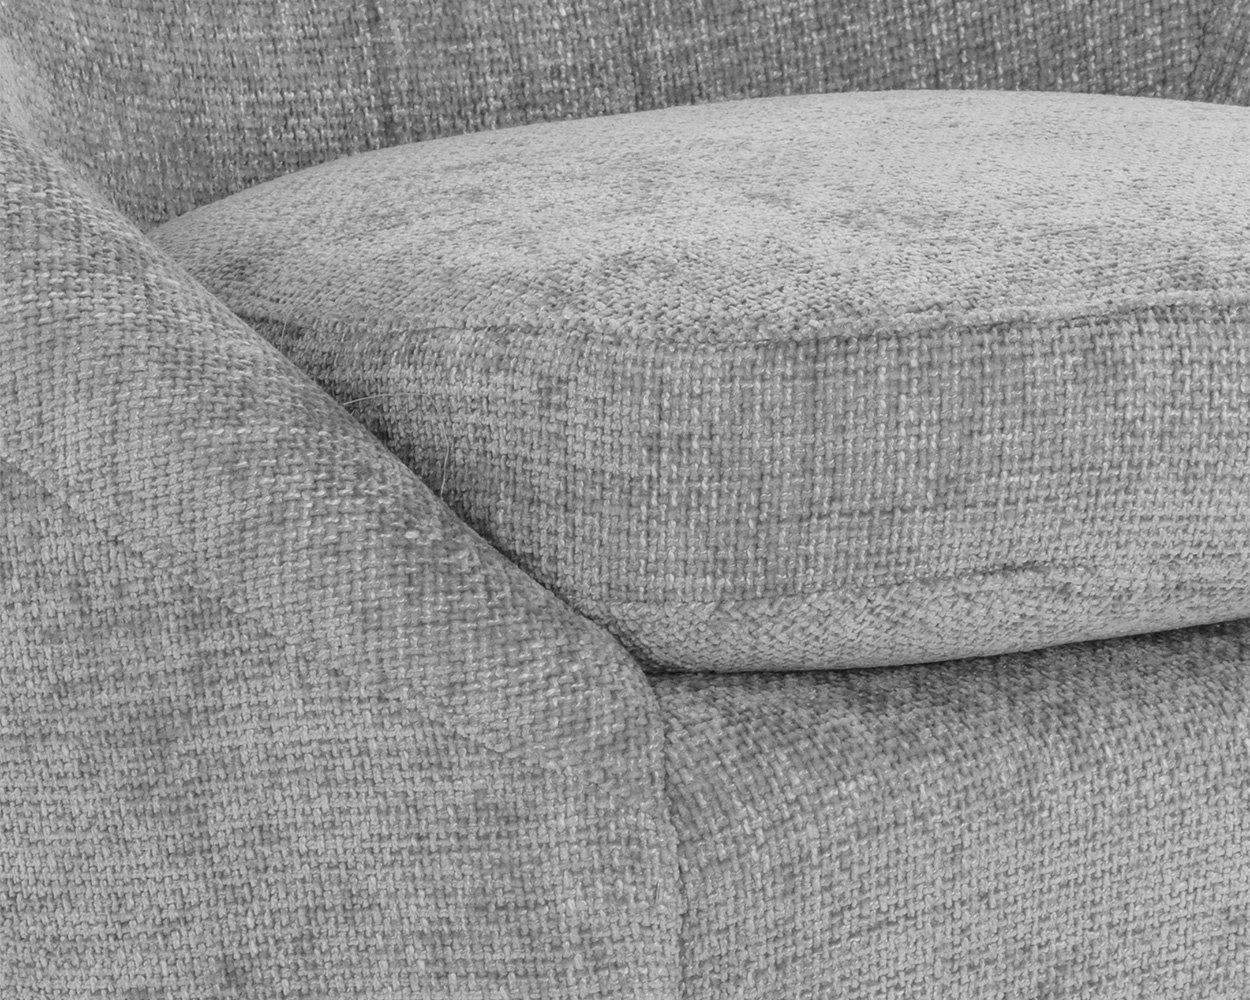 Sunpan Aurora Lounge Chair - Polo Club Stone / Overcast Grey — Grayson Home